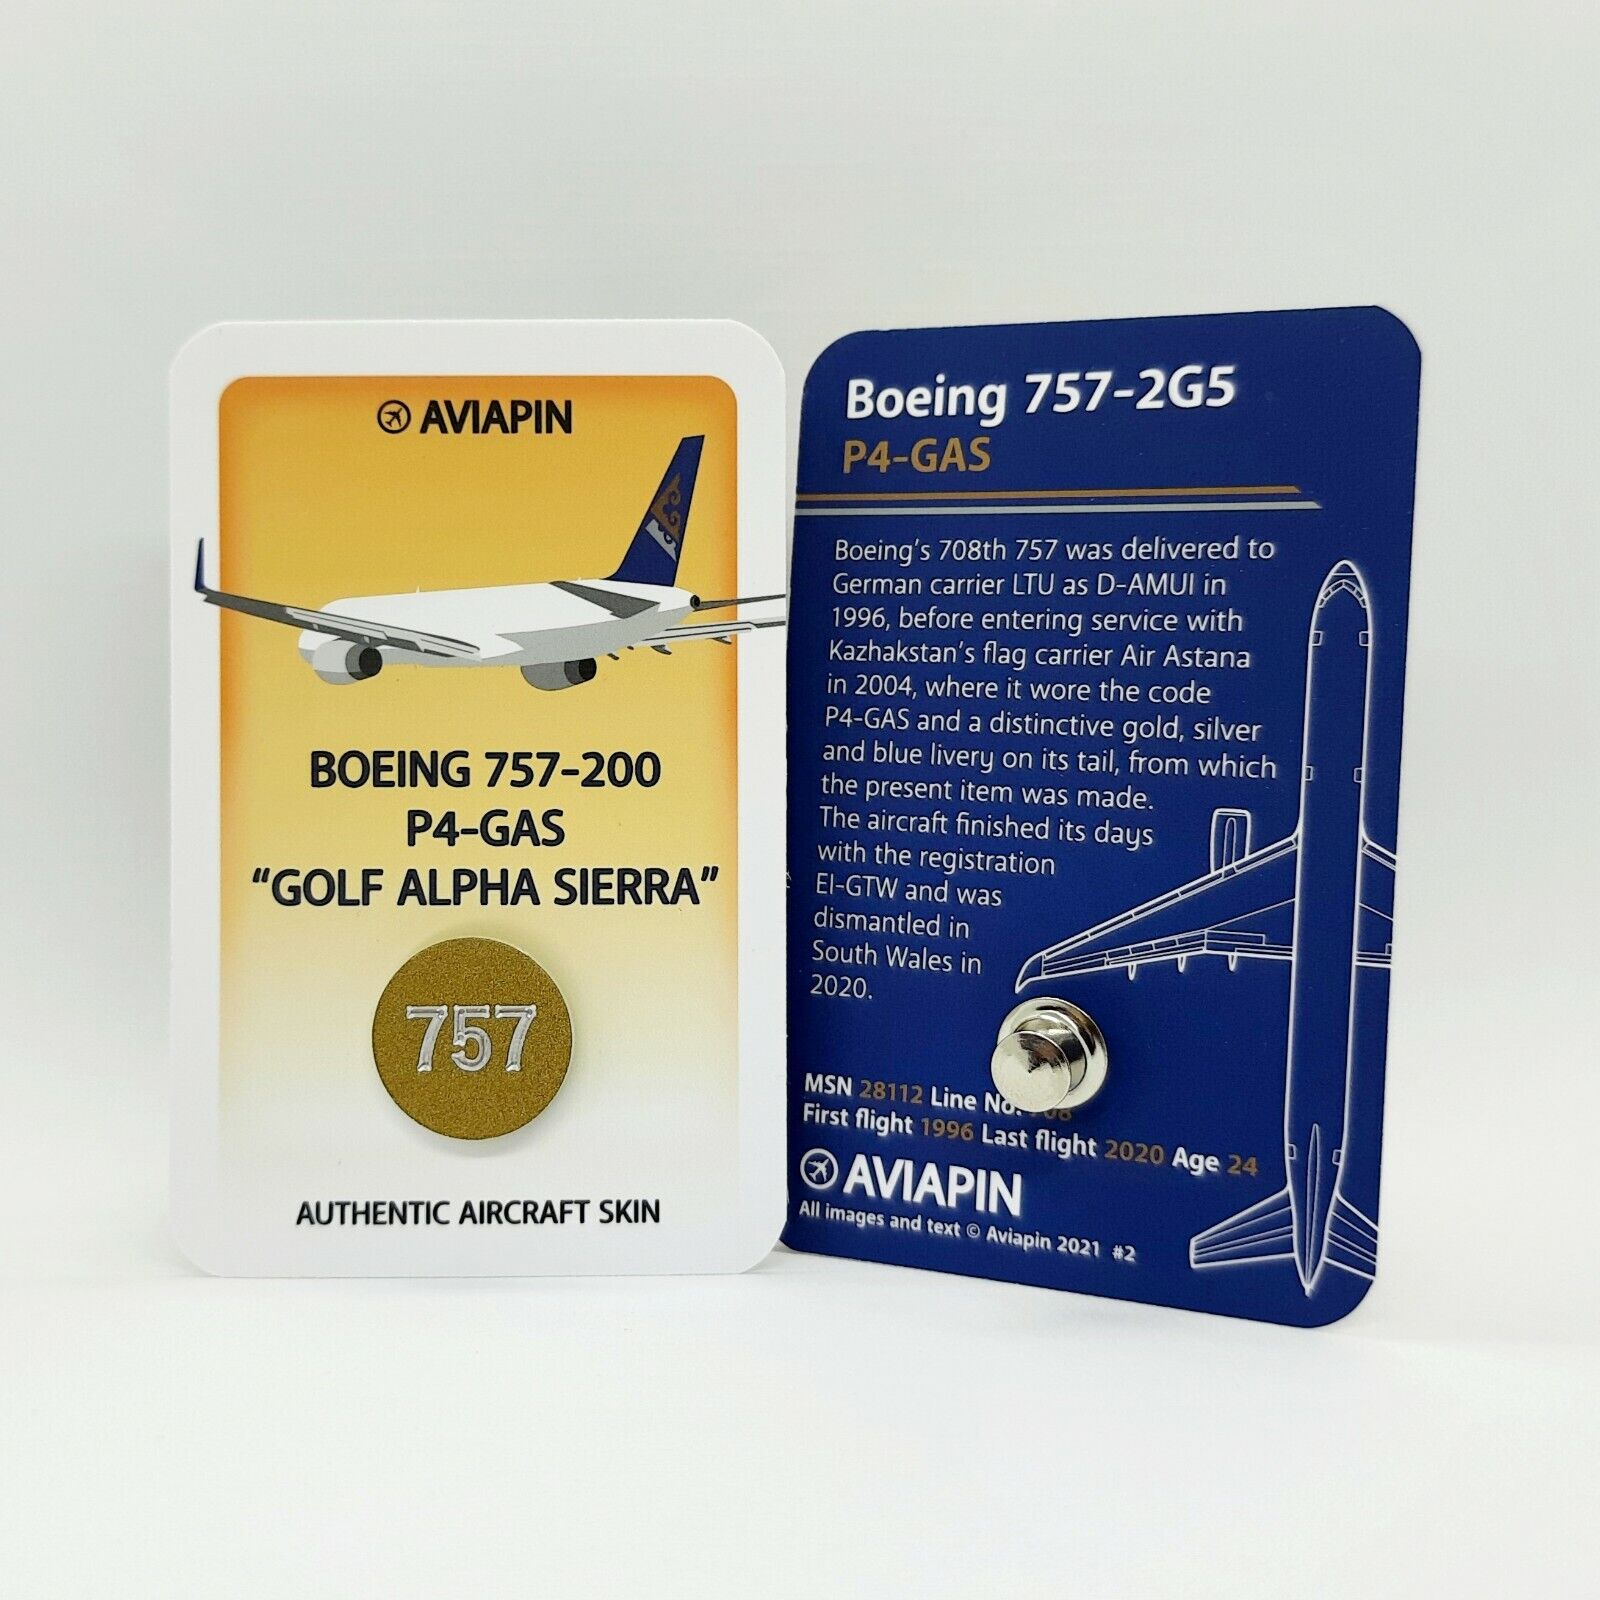 Aviapin Boeing 757-200 pin badge - genuine aircraft skin from Air Astana P4-GAS